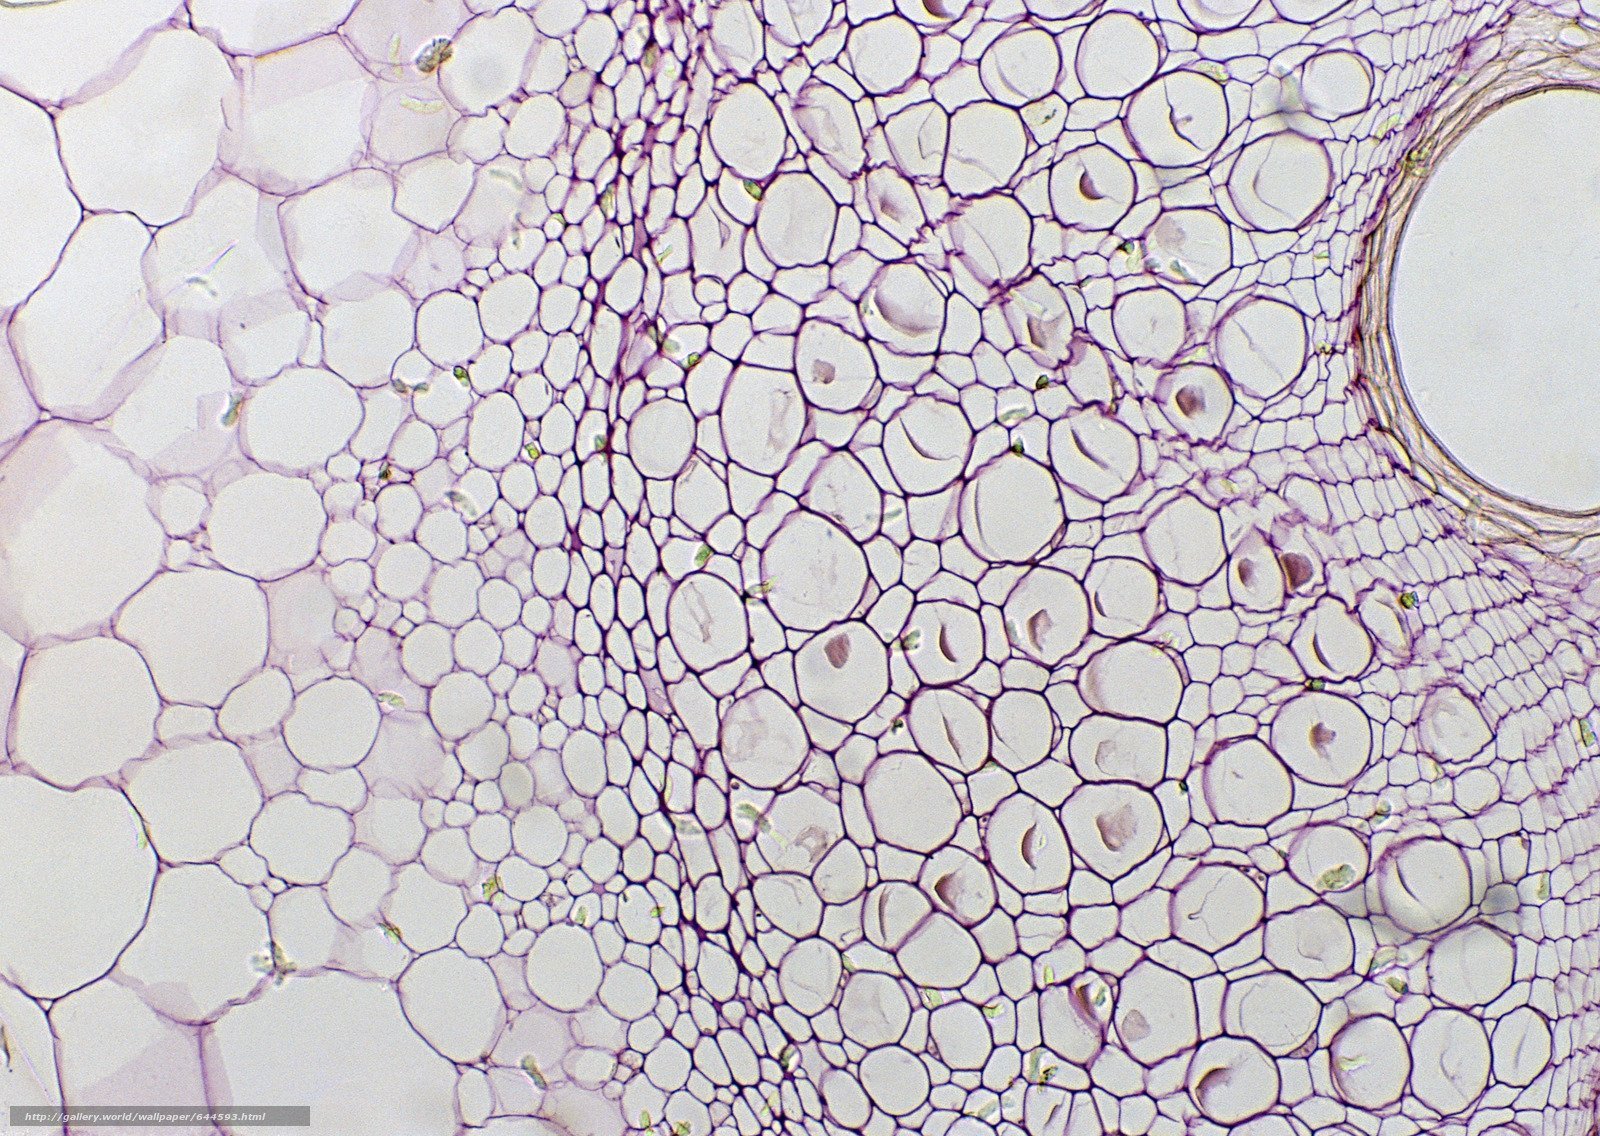 Клетки организма под микроскопом